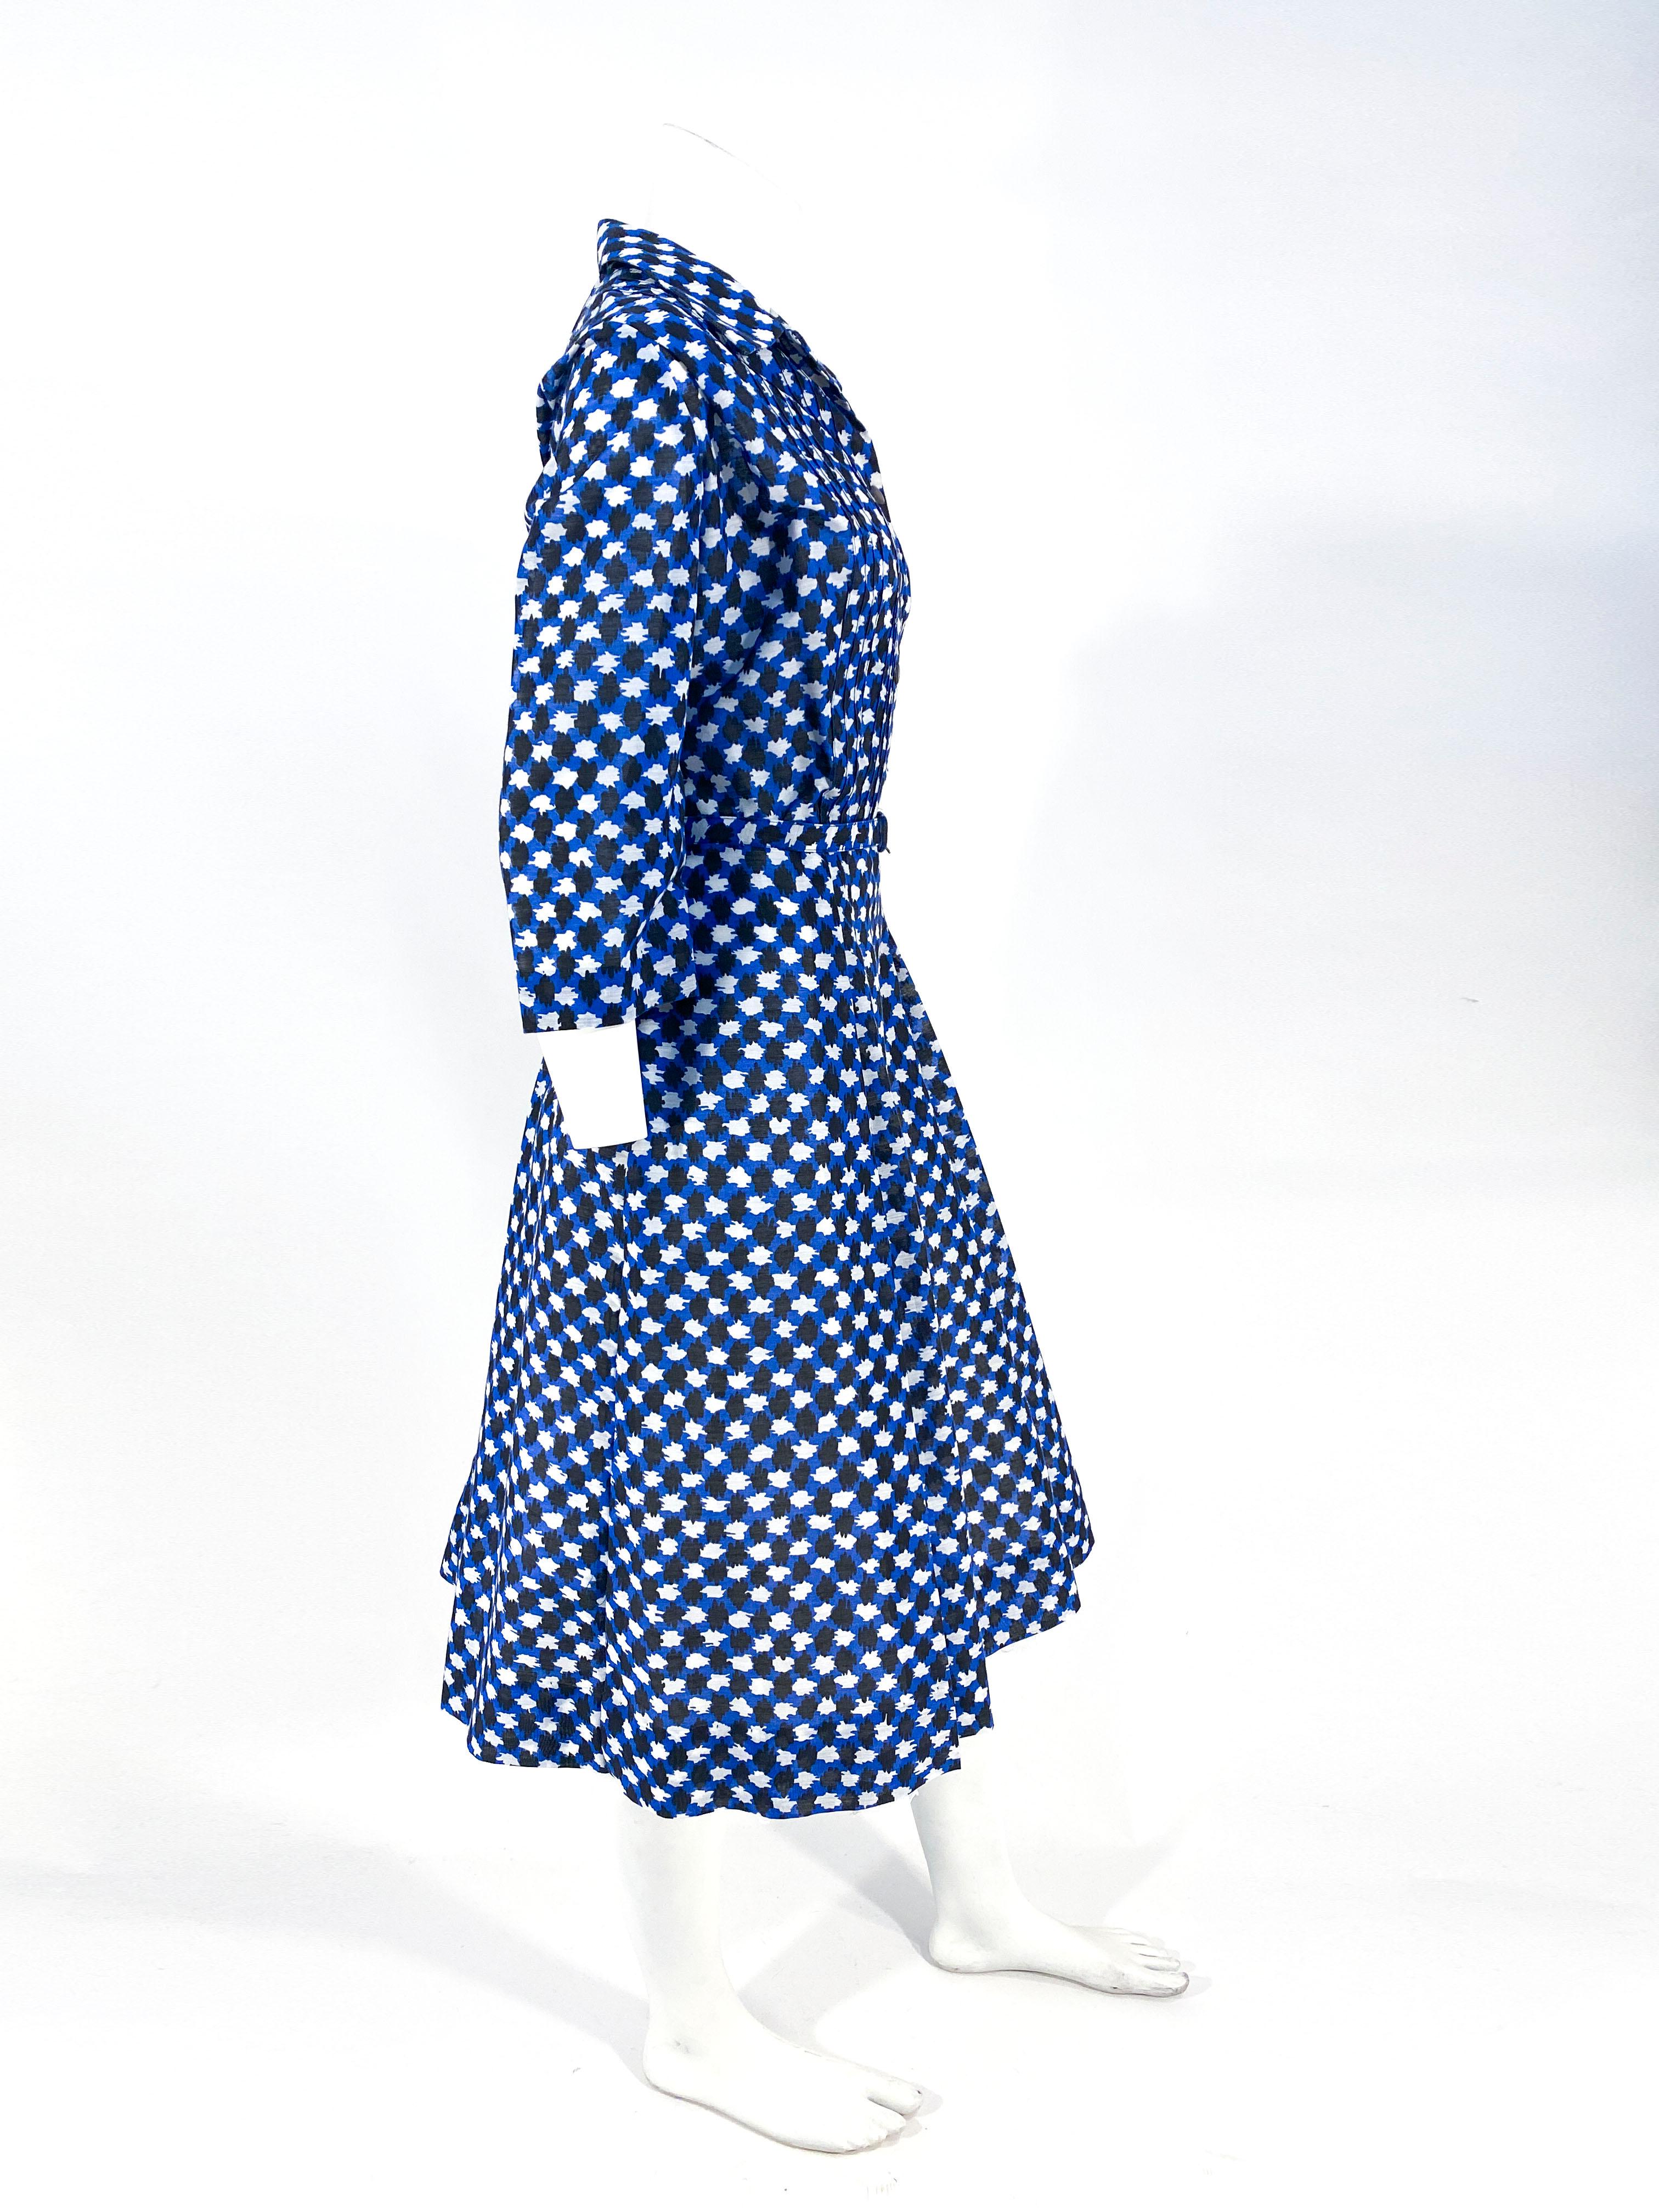 B1 BAROQUE PRINT DRESS 1960's midcentury shirtwaist 60's M